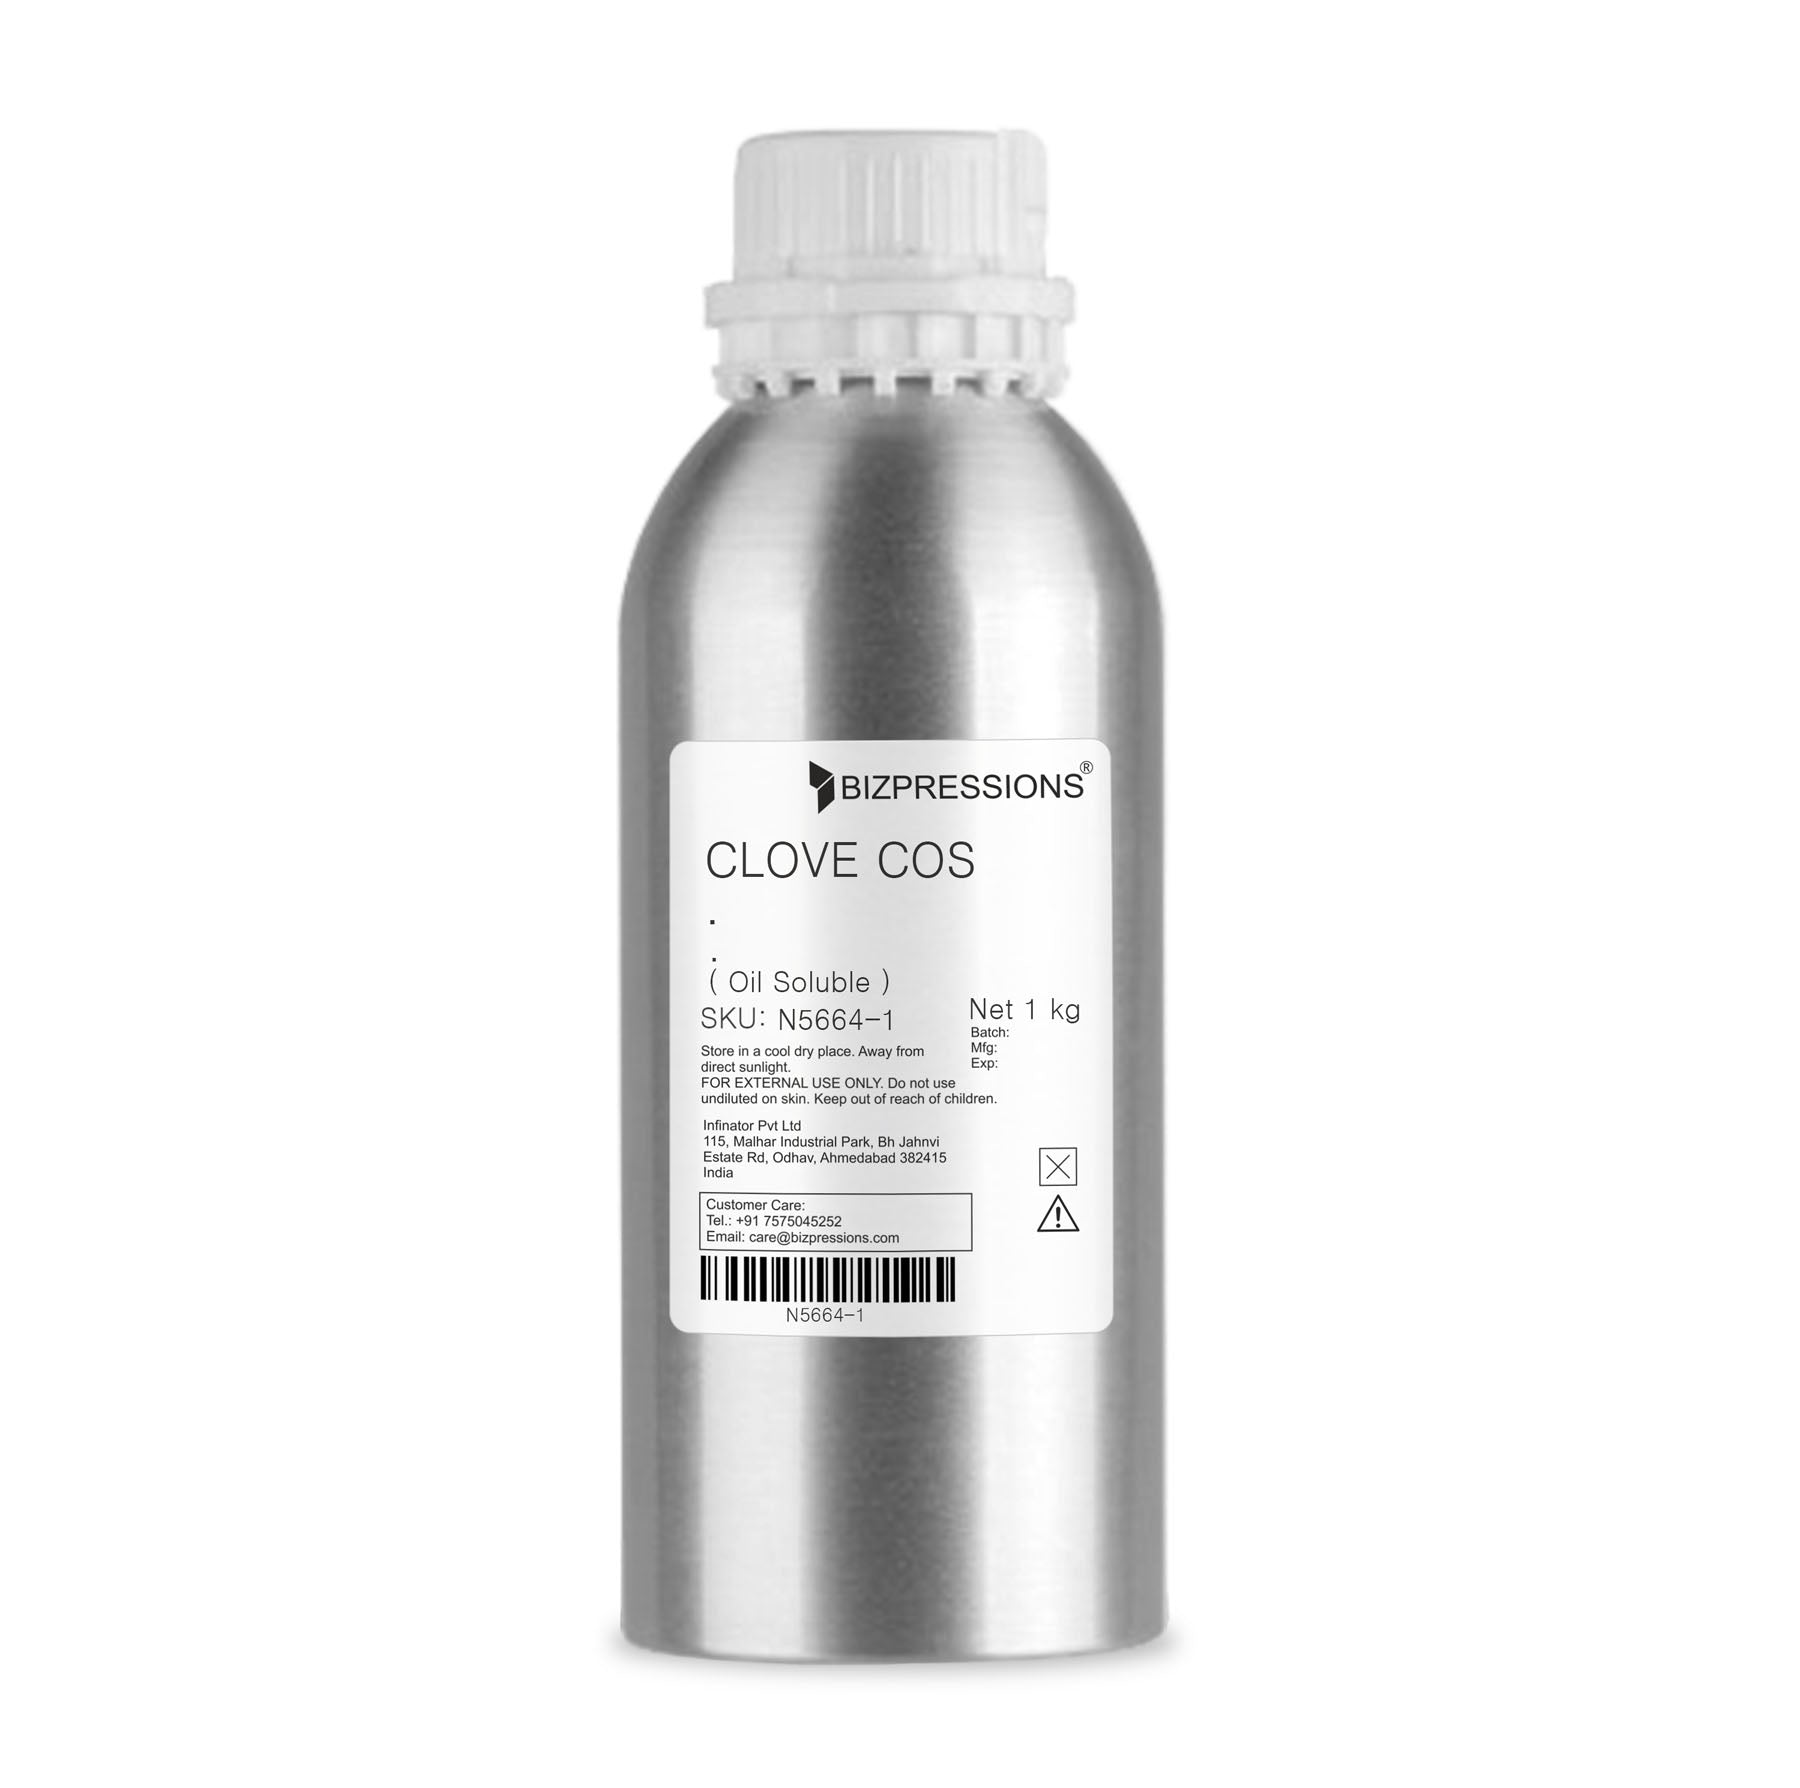 CLOVE COS - Fragrance ( Oil Soluble ) - 1 kg